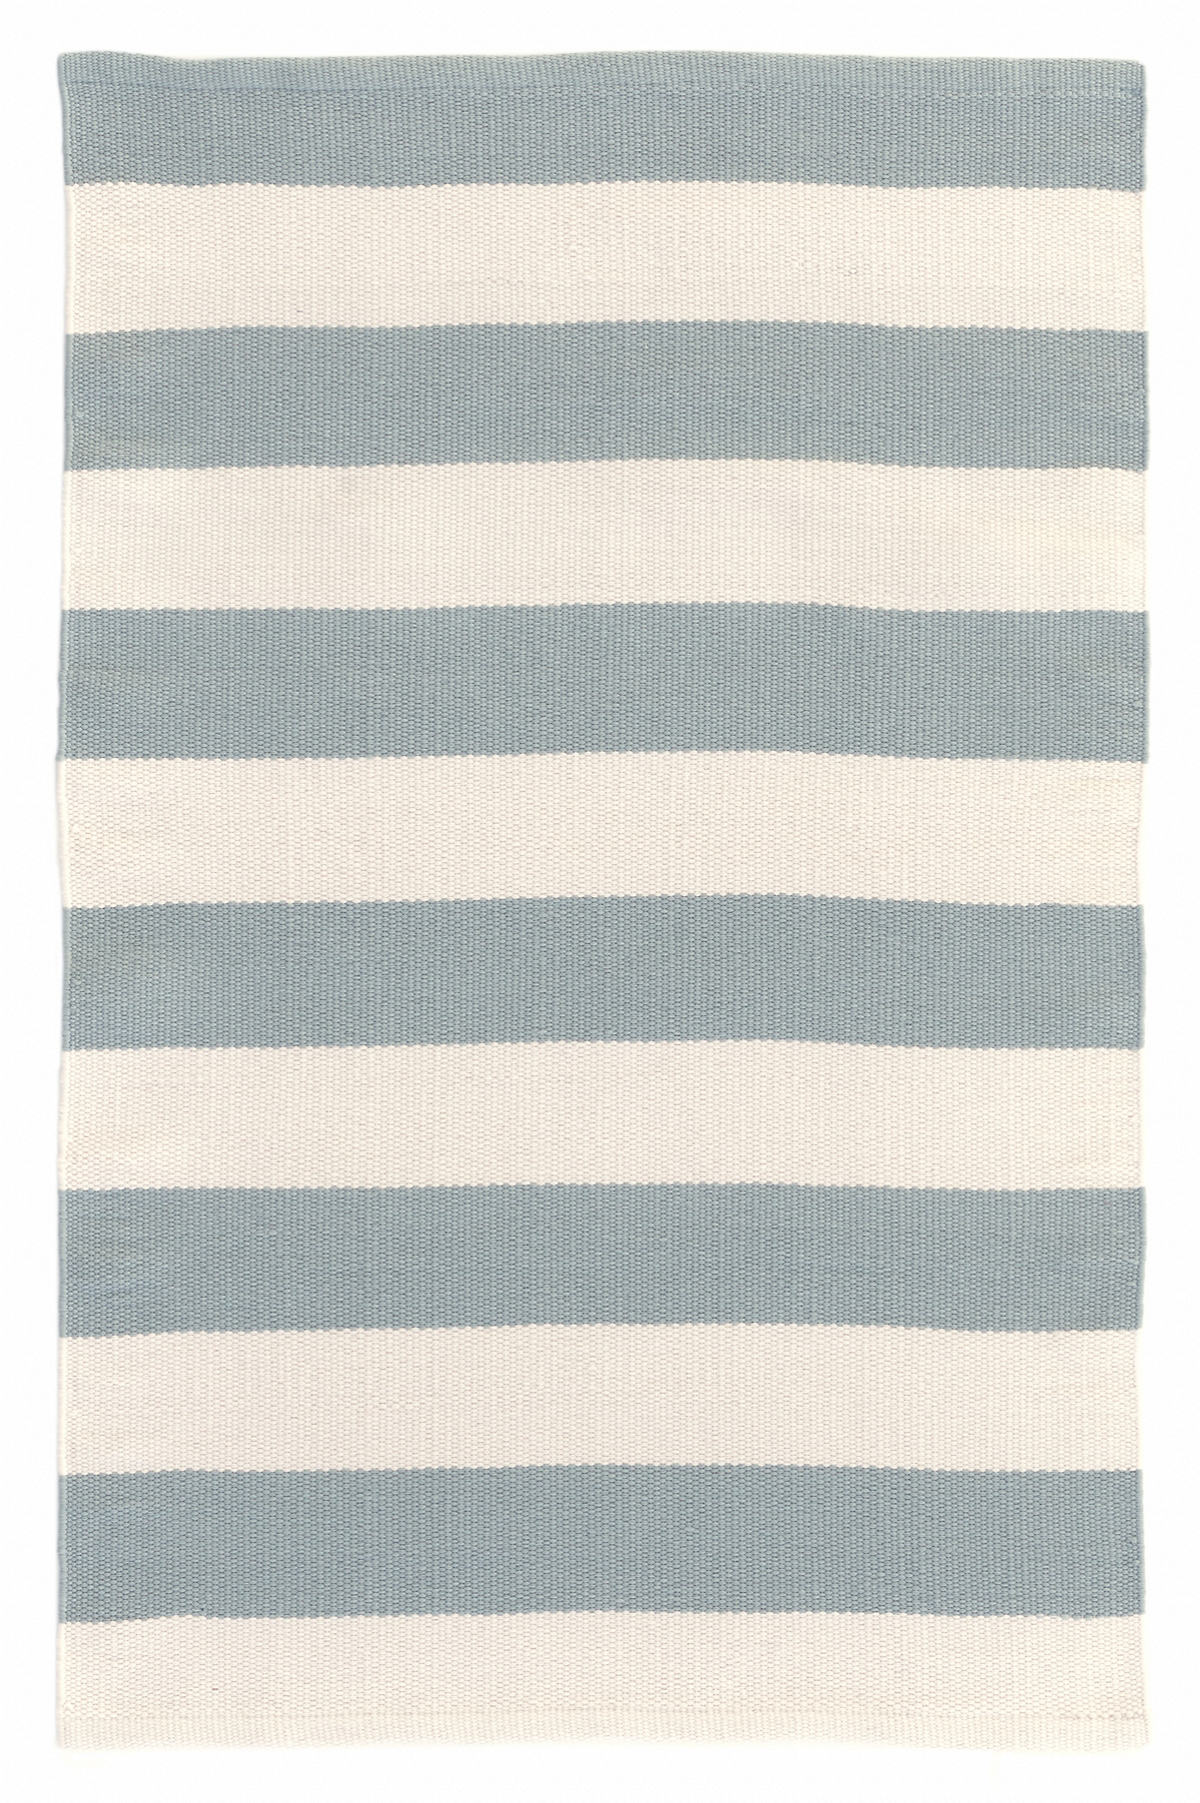 Catamaran Stripe Light Blue Ivory, Indoor Outdoor Blue Striped Rug